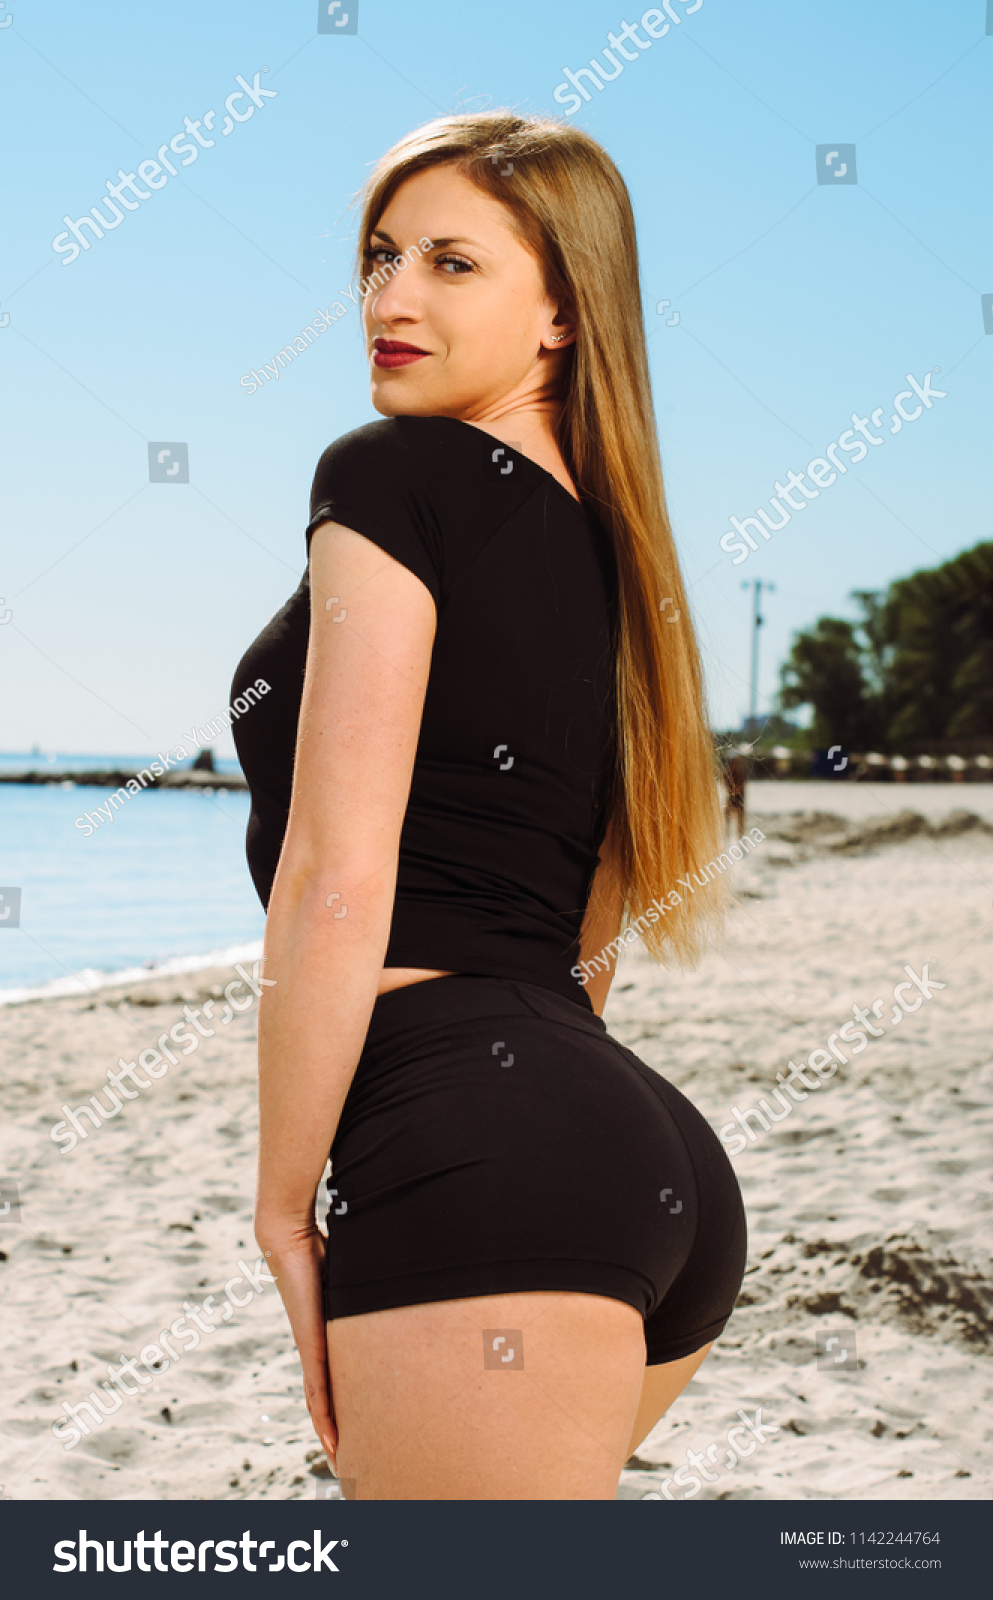 Beautiful Ass Girls Pictures